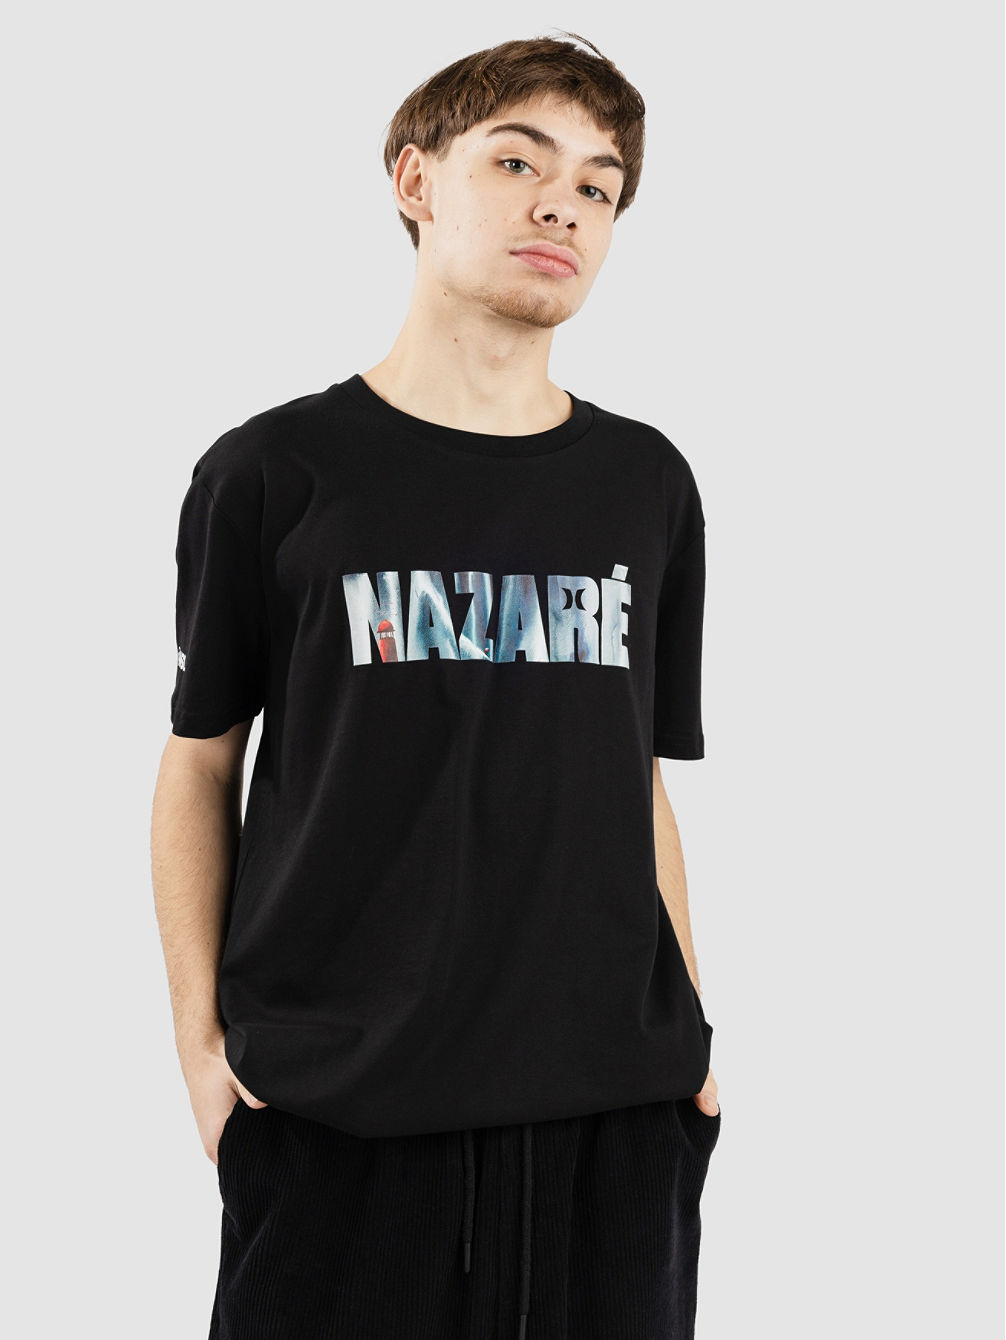 Nazare T-Shirt